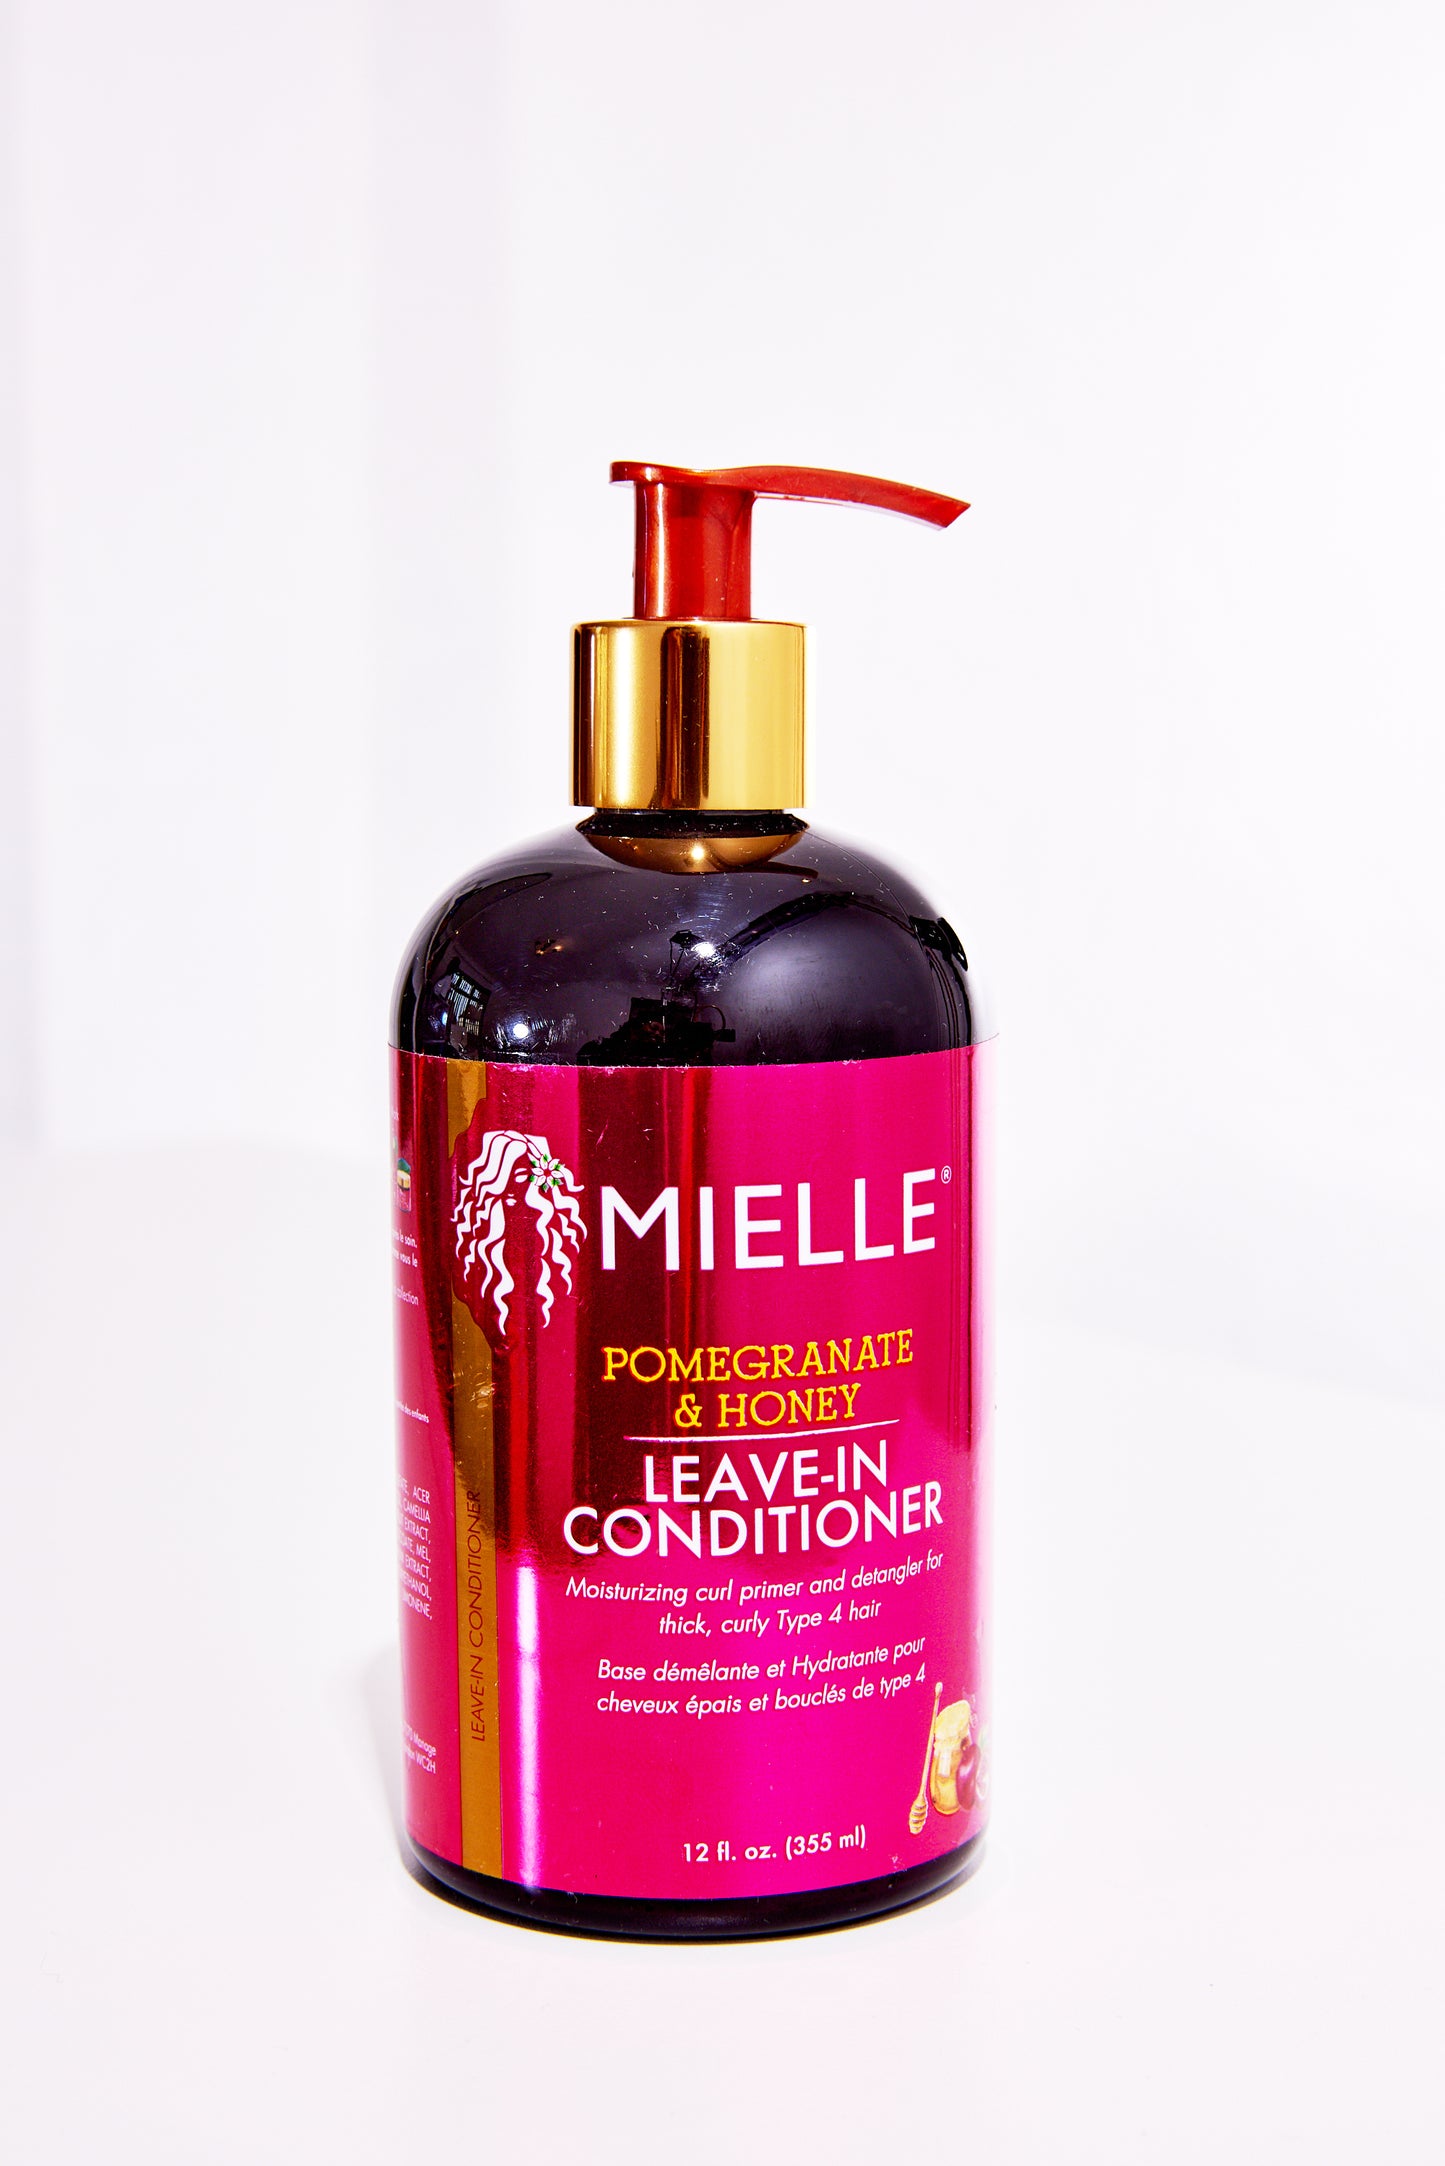 Mielle Pomegranate & Honey Leave in Conditioner